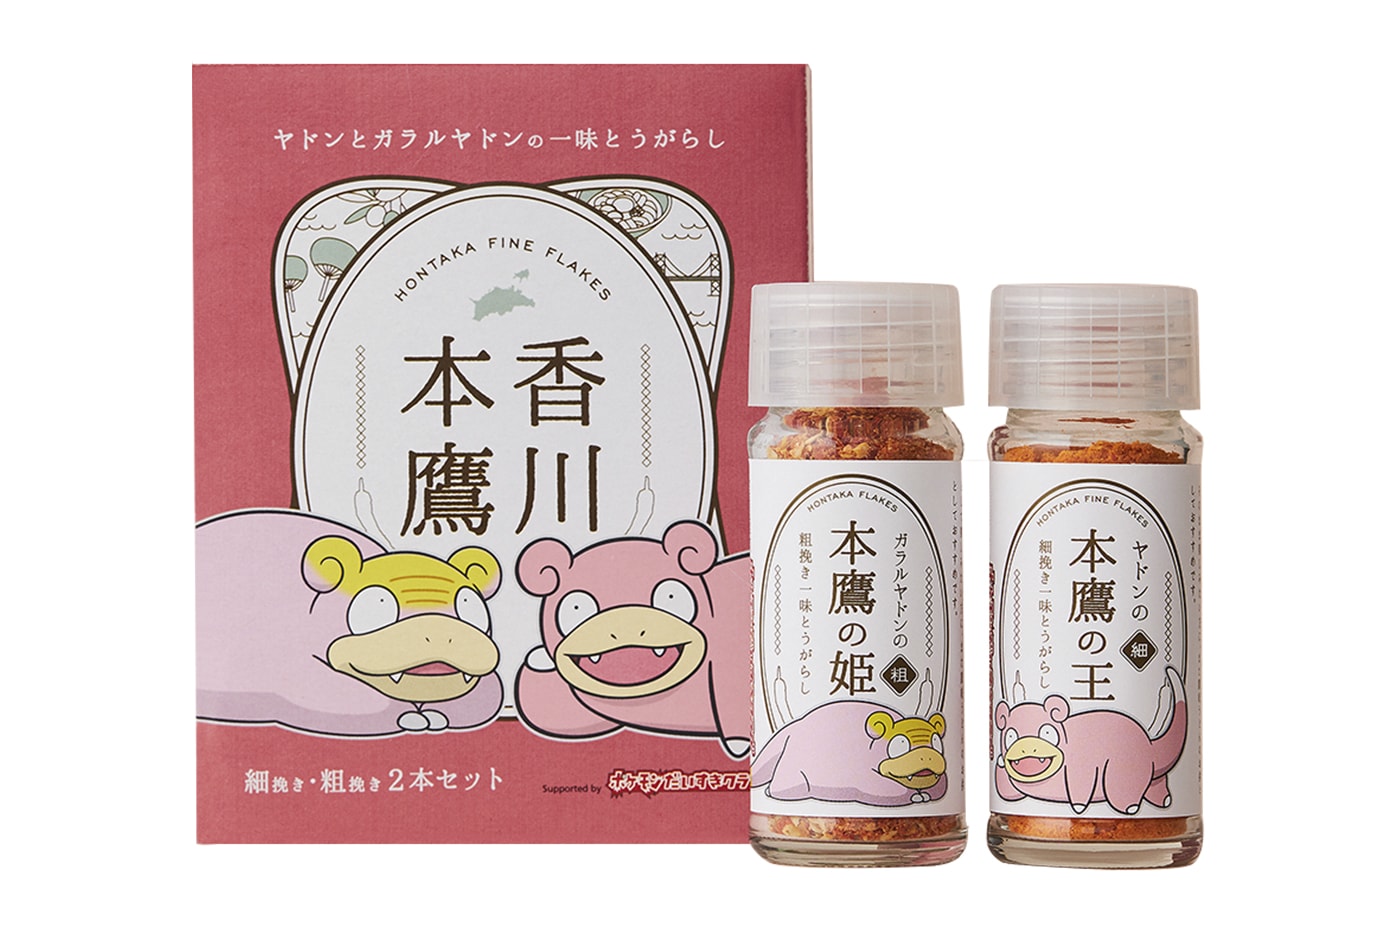 Slowpoke Kagawa Prefecture Pokémon Ambassador keychains rice Curry udon spice yudon pokemon 25th anniversary Japan food snacks collectibles 